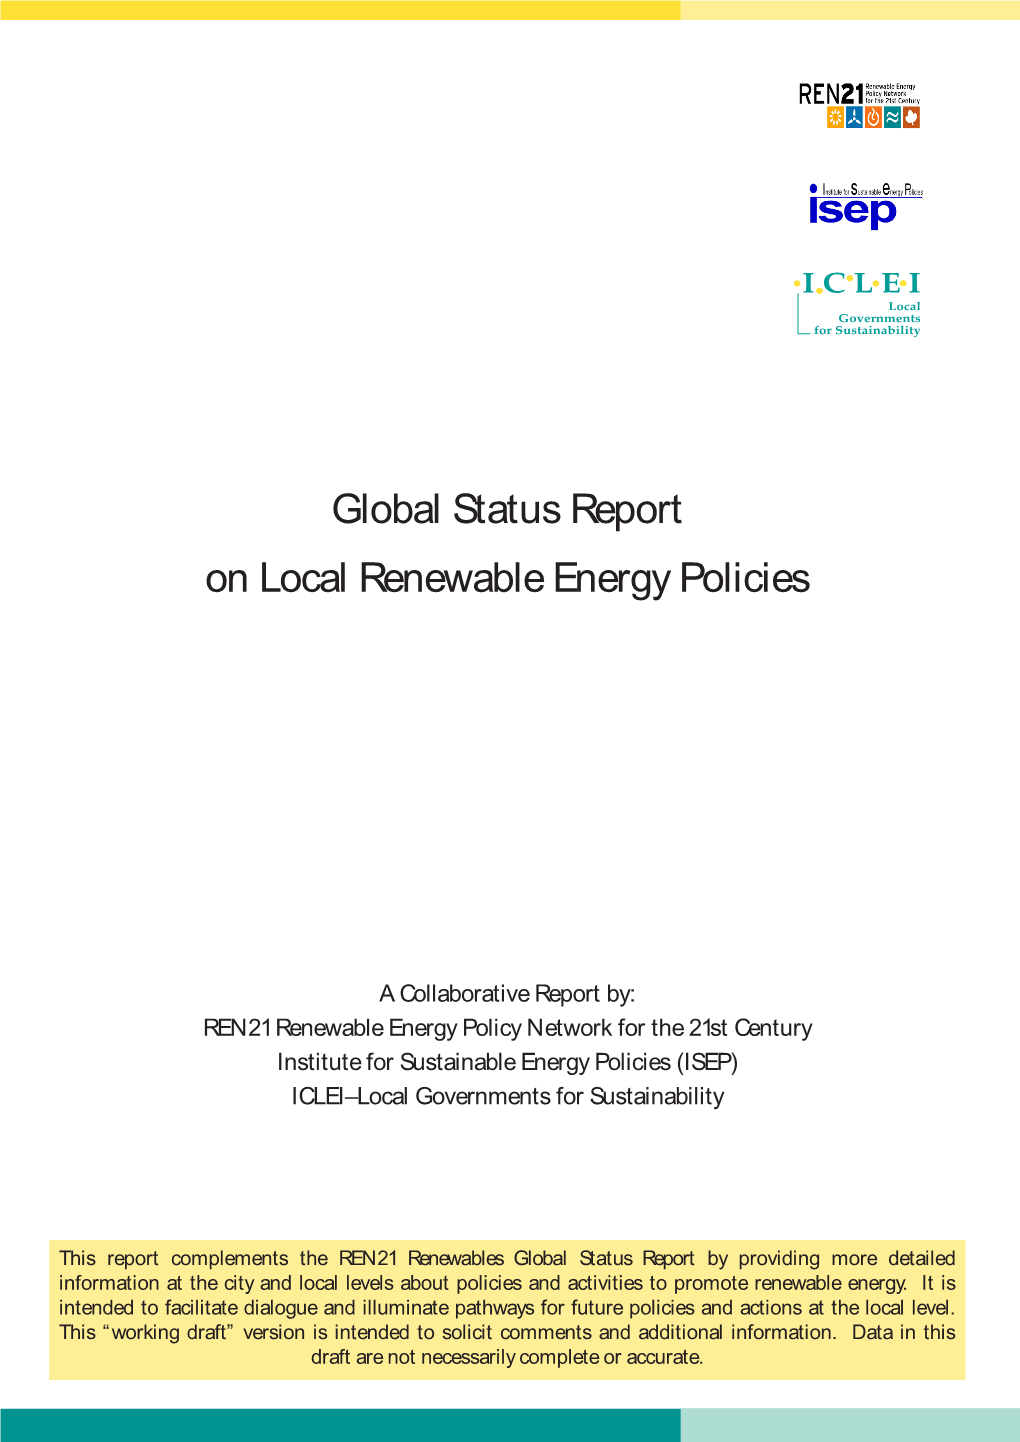 Global Status Report on Local Renewable Energy Policies